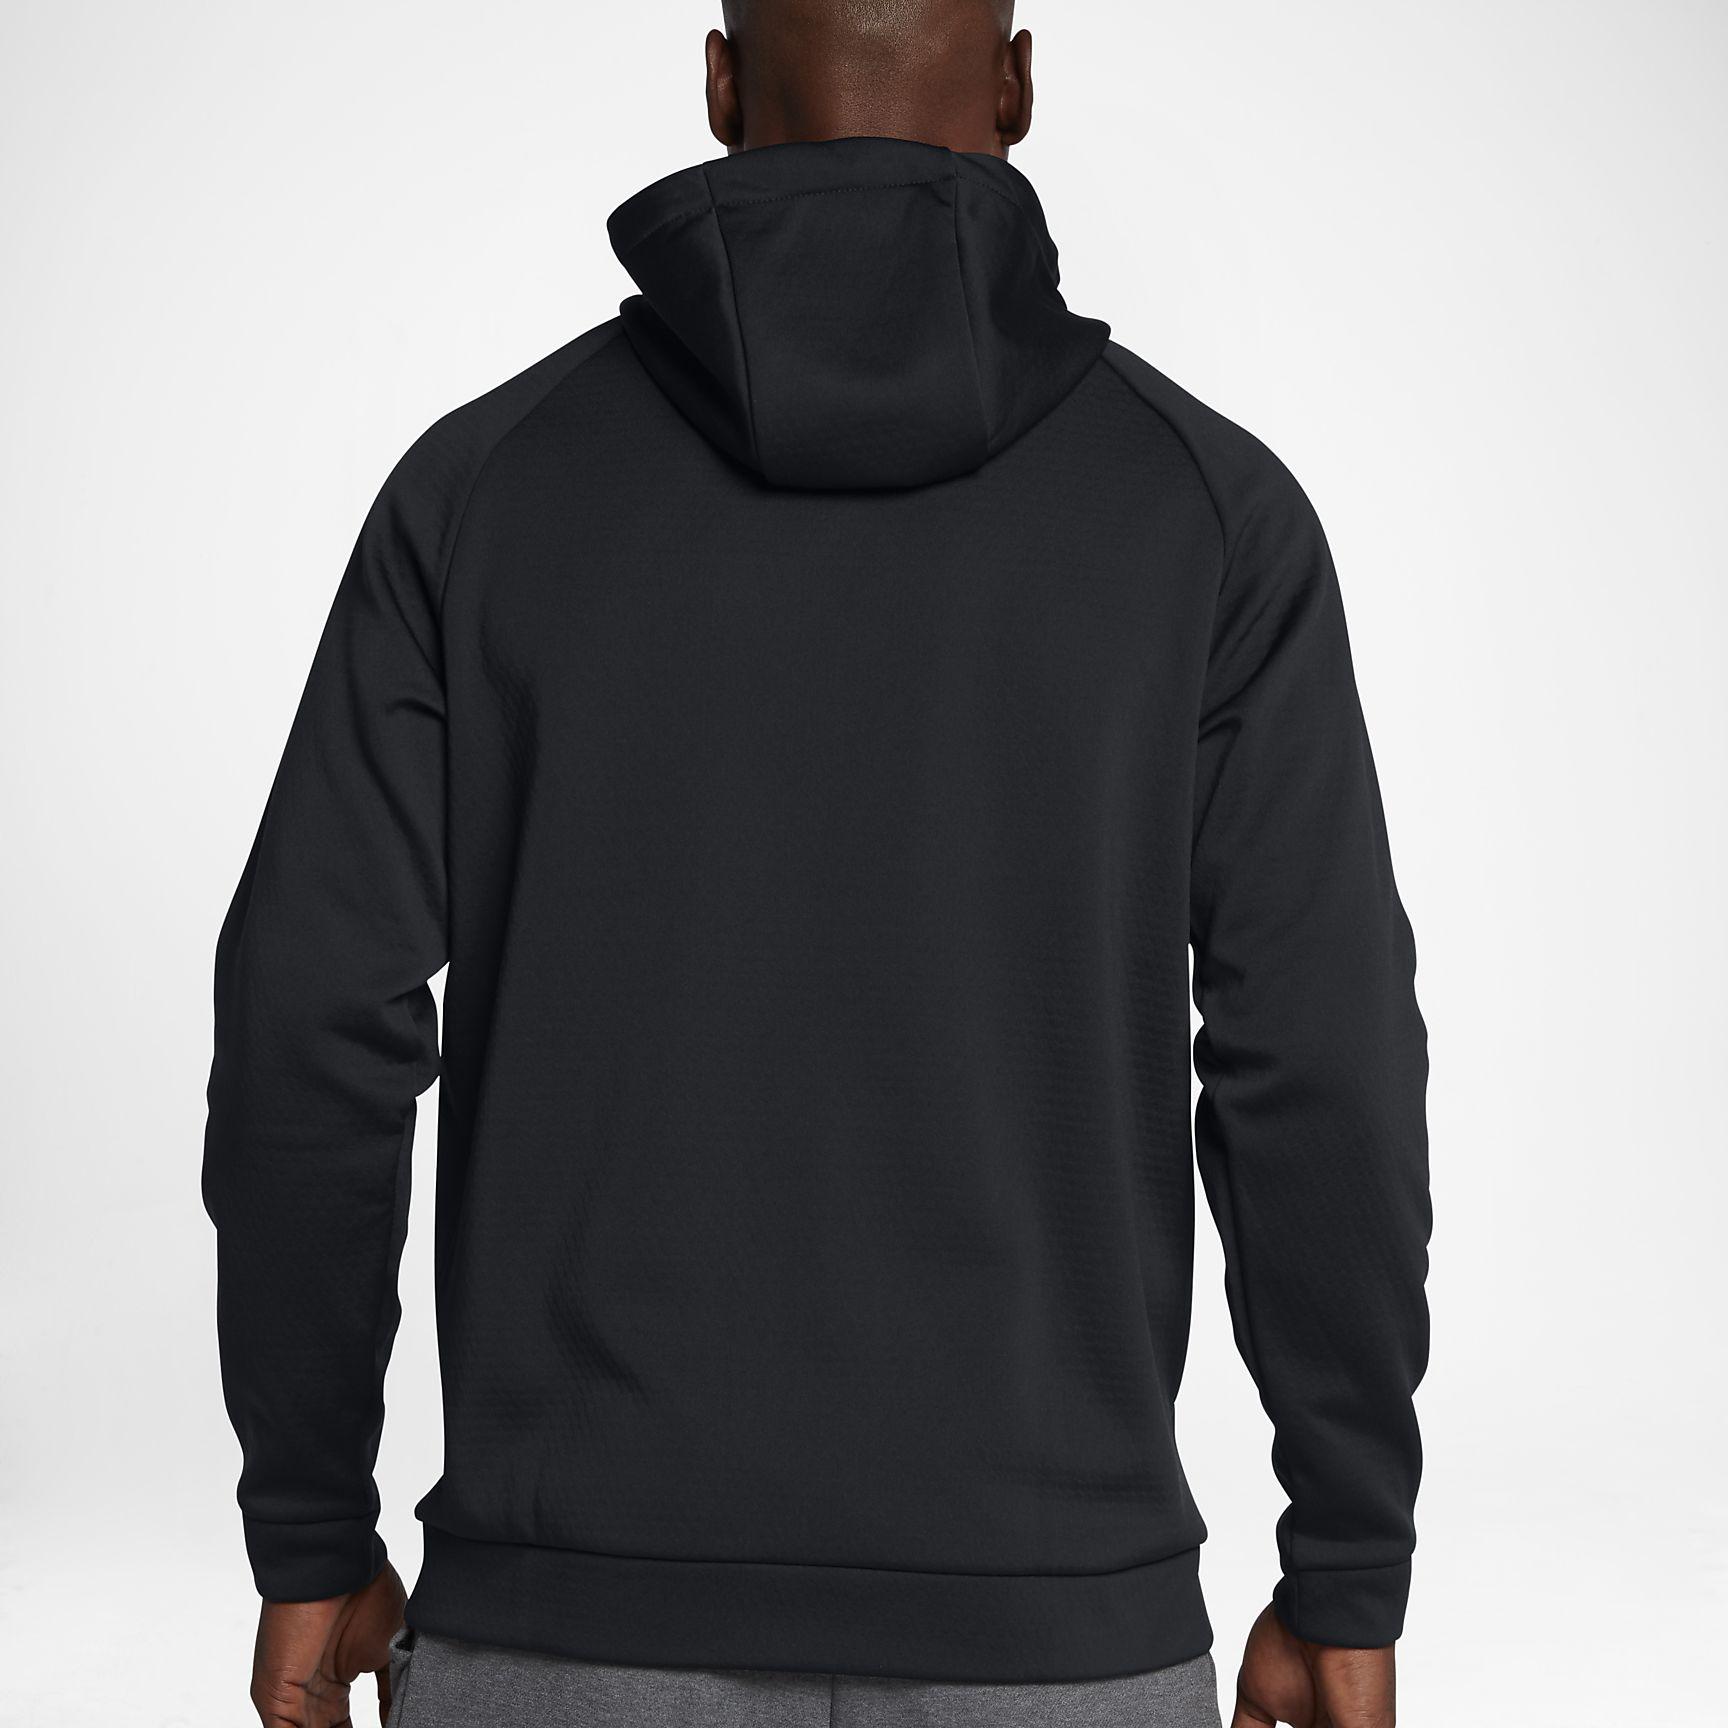 Nike Mens Therma Sphere Training Jacket - Black/Cool Grey - Tennisnuts.com